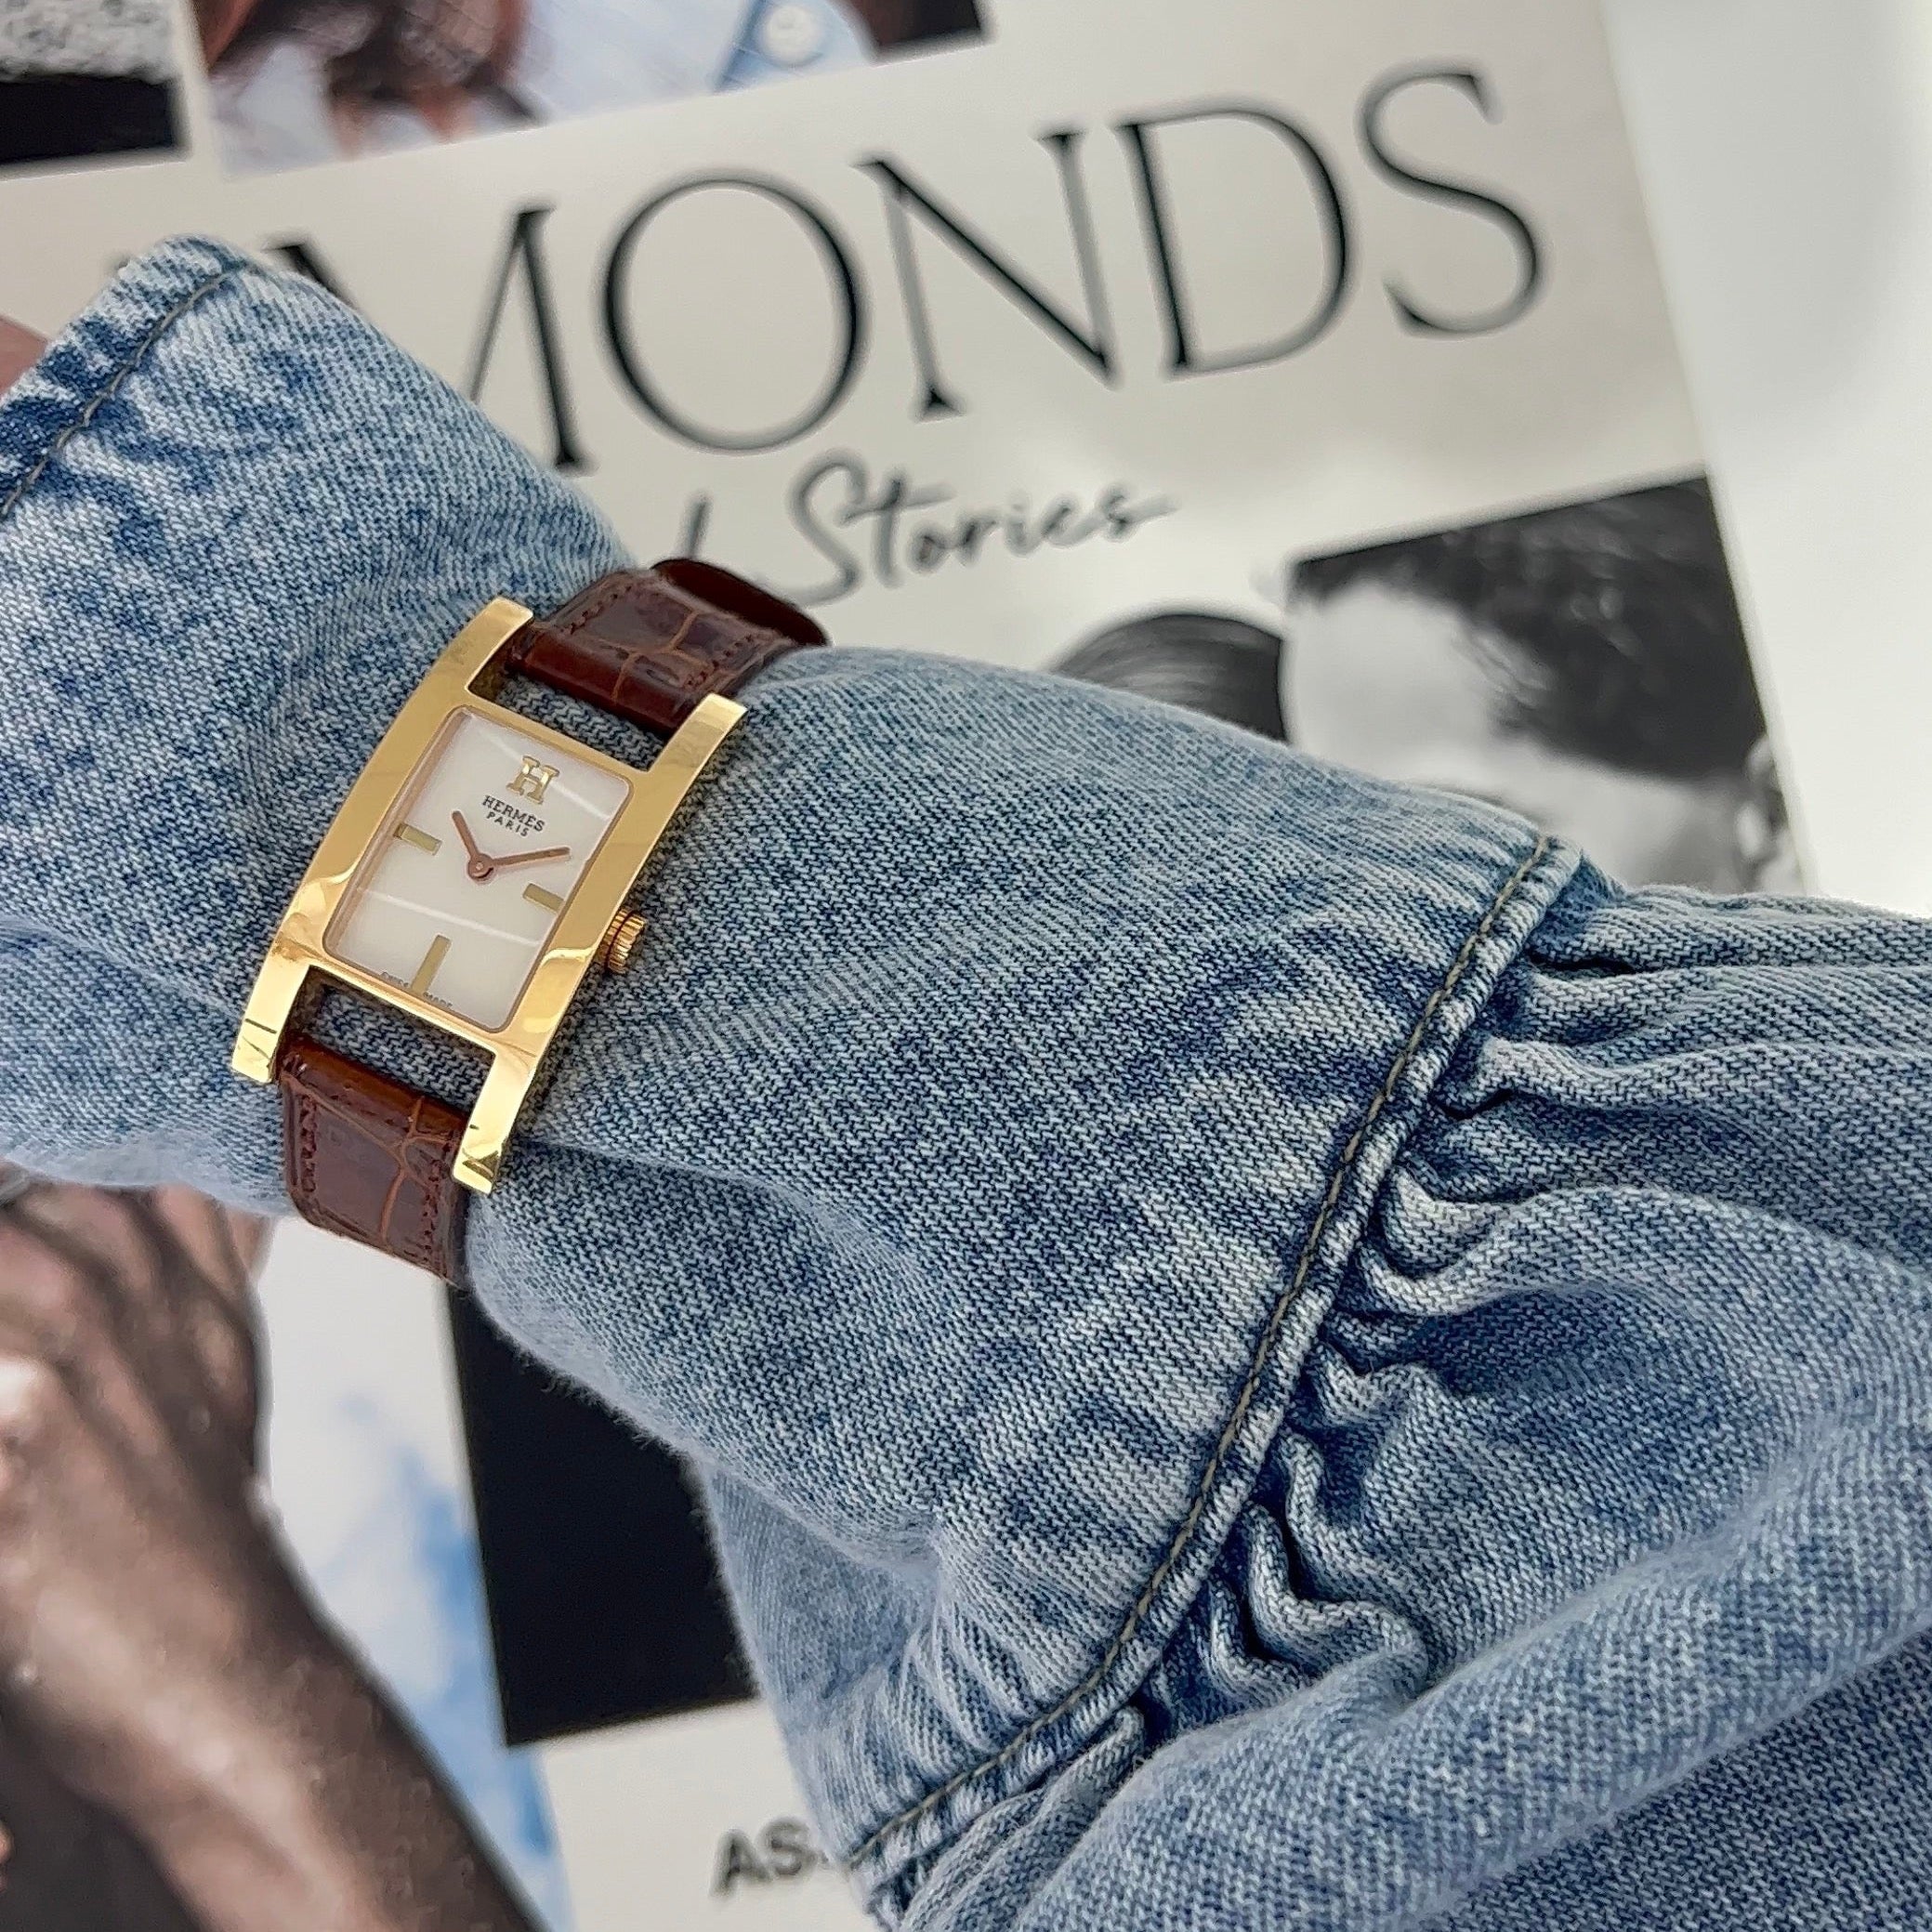 Vintage Hermès Watch – Henri Noël